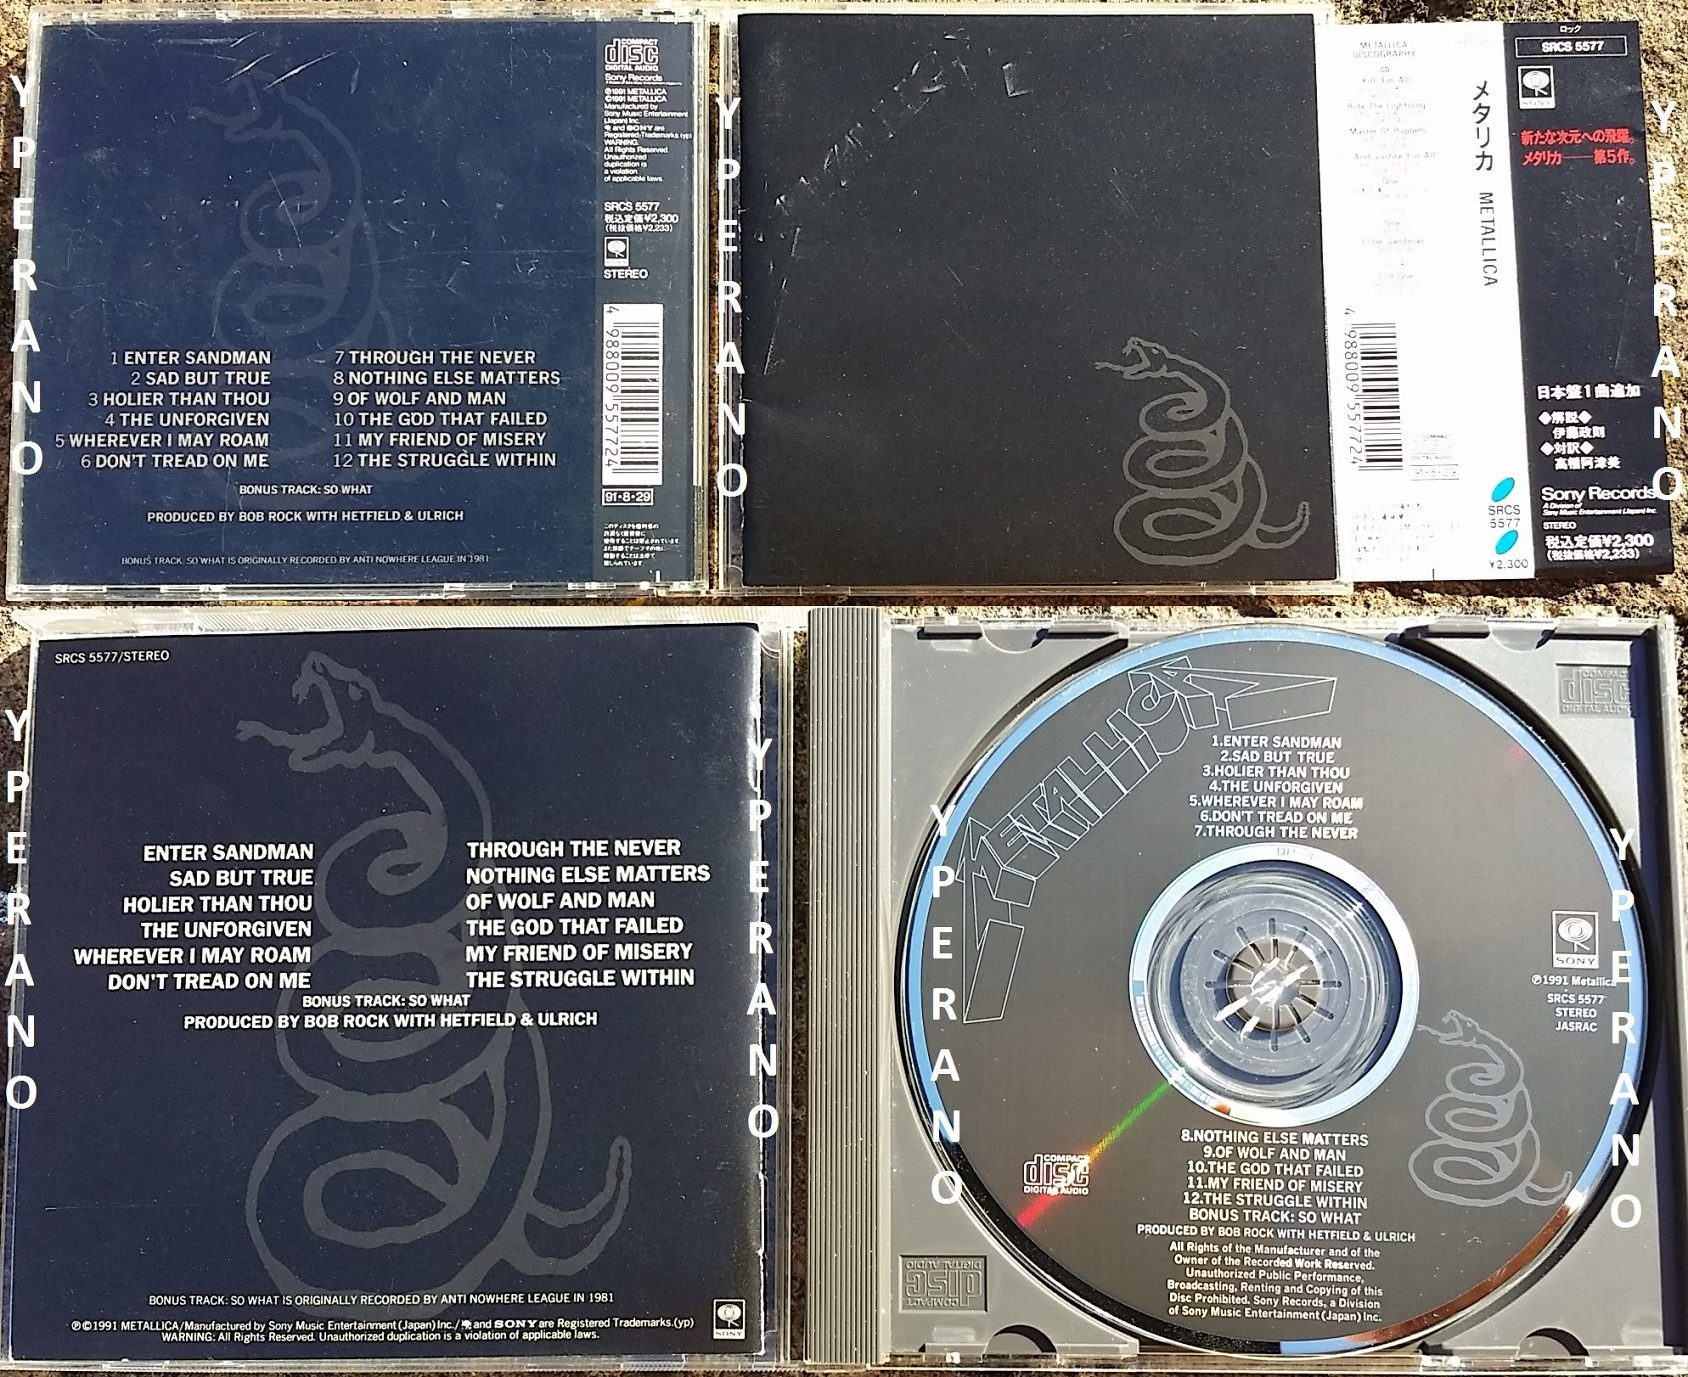 https://yperano.com/wp-content/uploads/2016/03/METALLICA-Metallica-Black-album-s.t-CD-Japanese-1991-1-rotated-e1646218914423.jpg